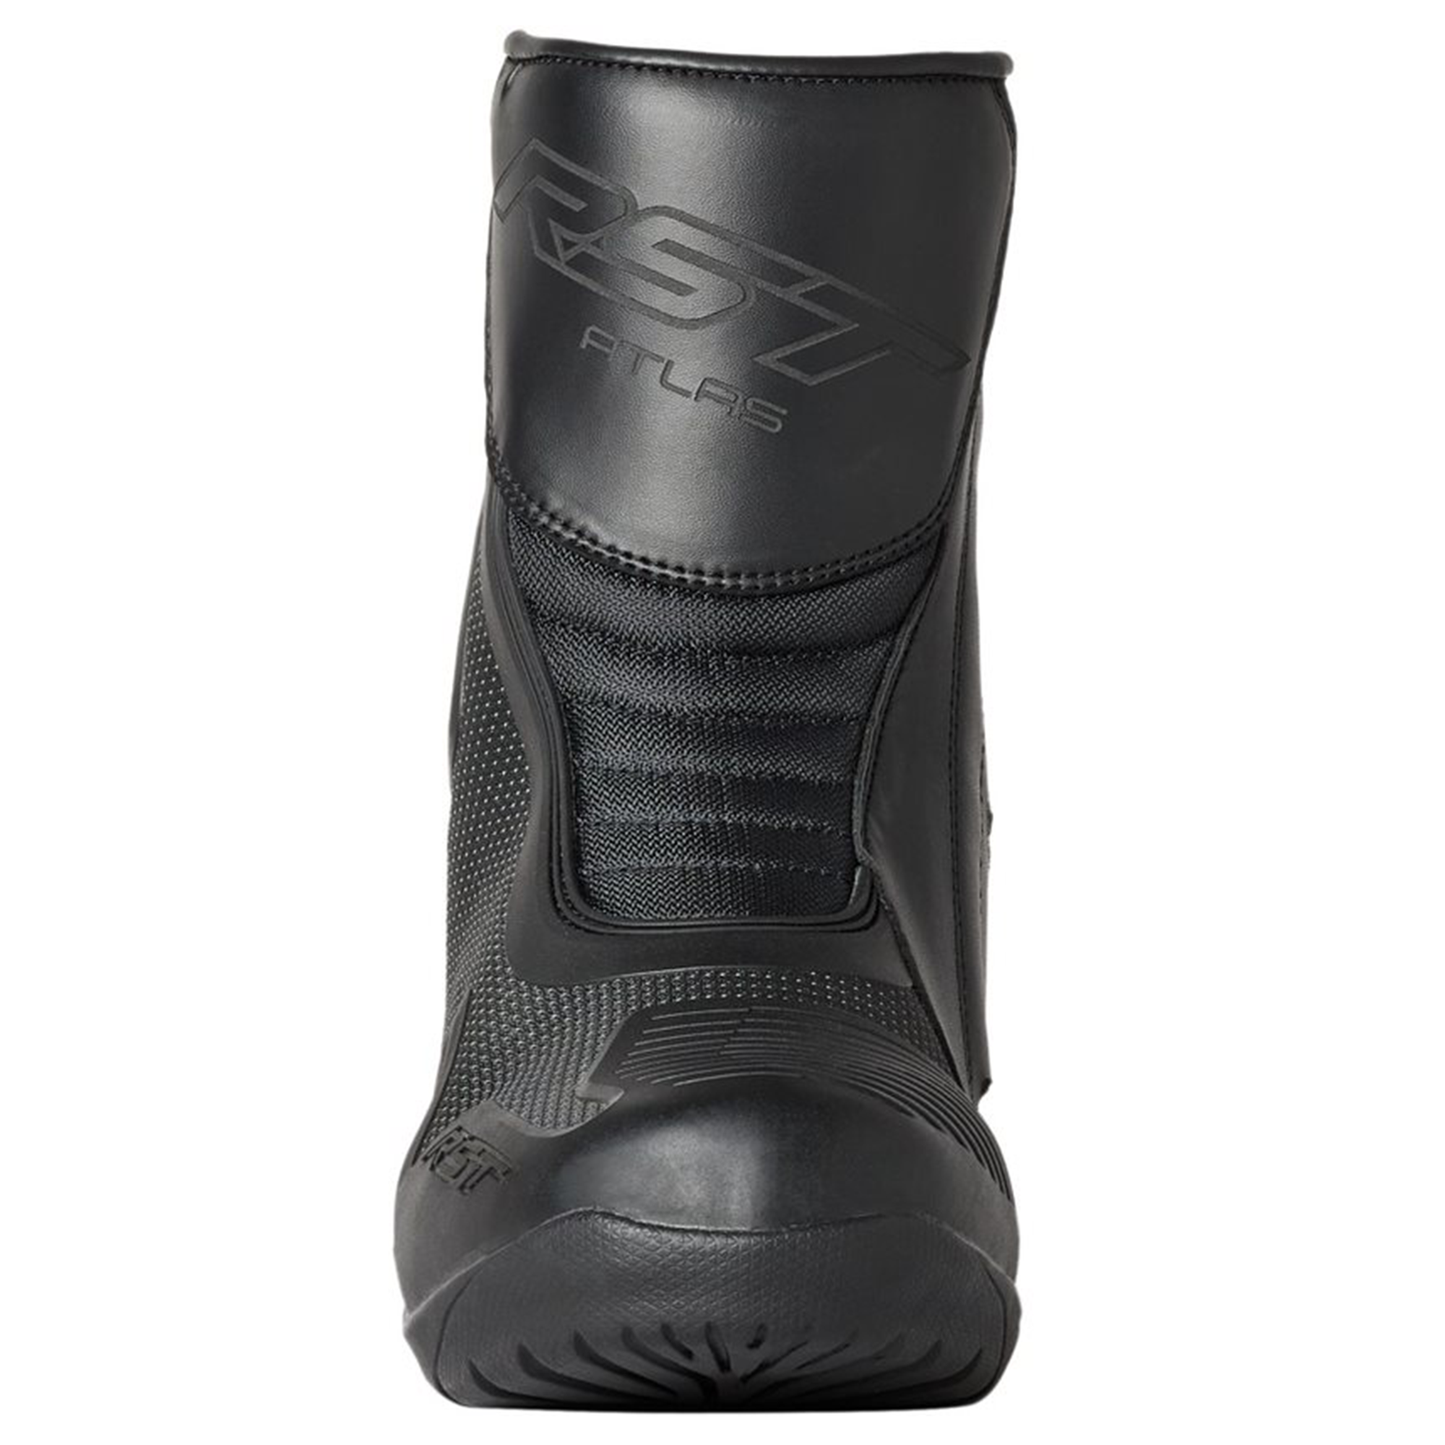 RST Atlas Mid Waterproof Men's Boots - Black